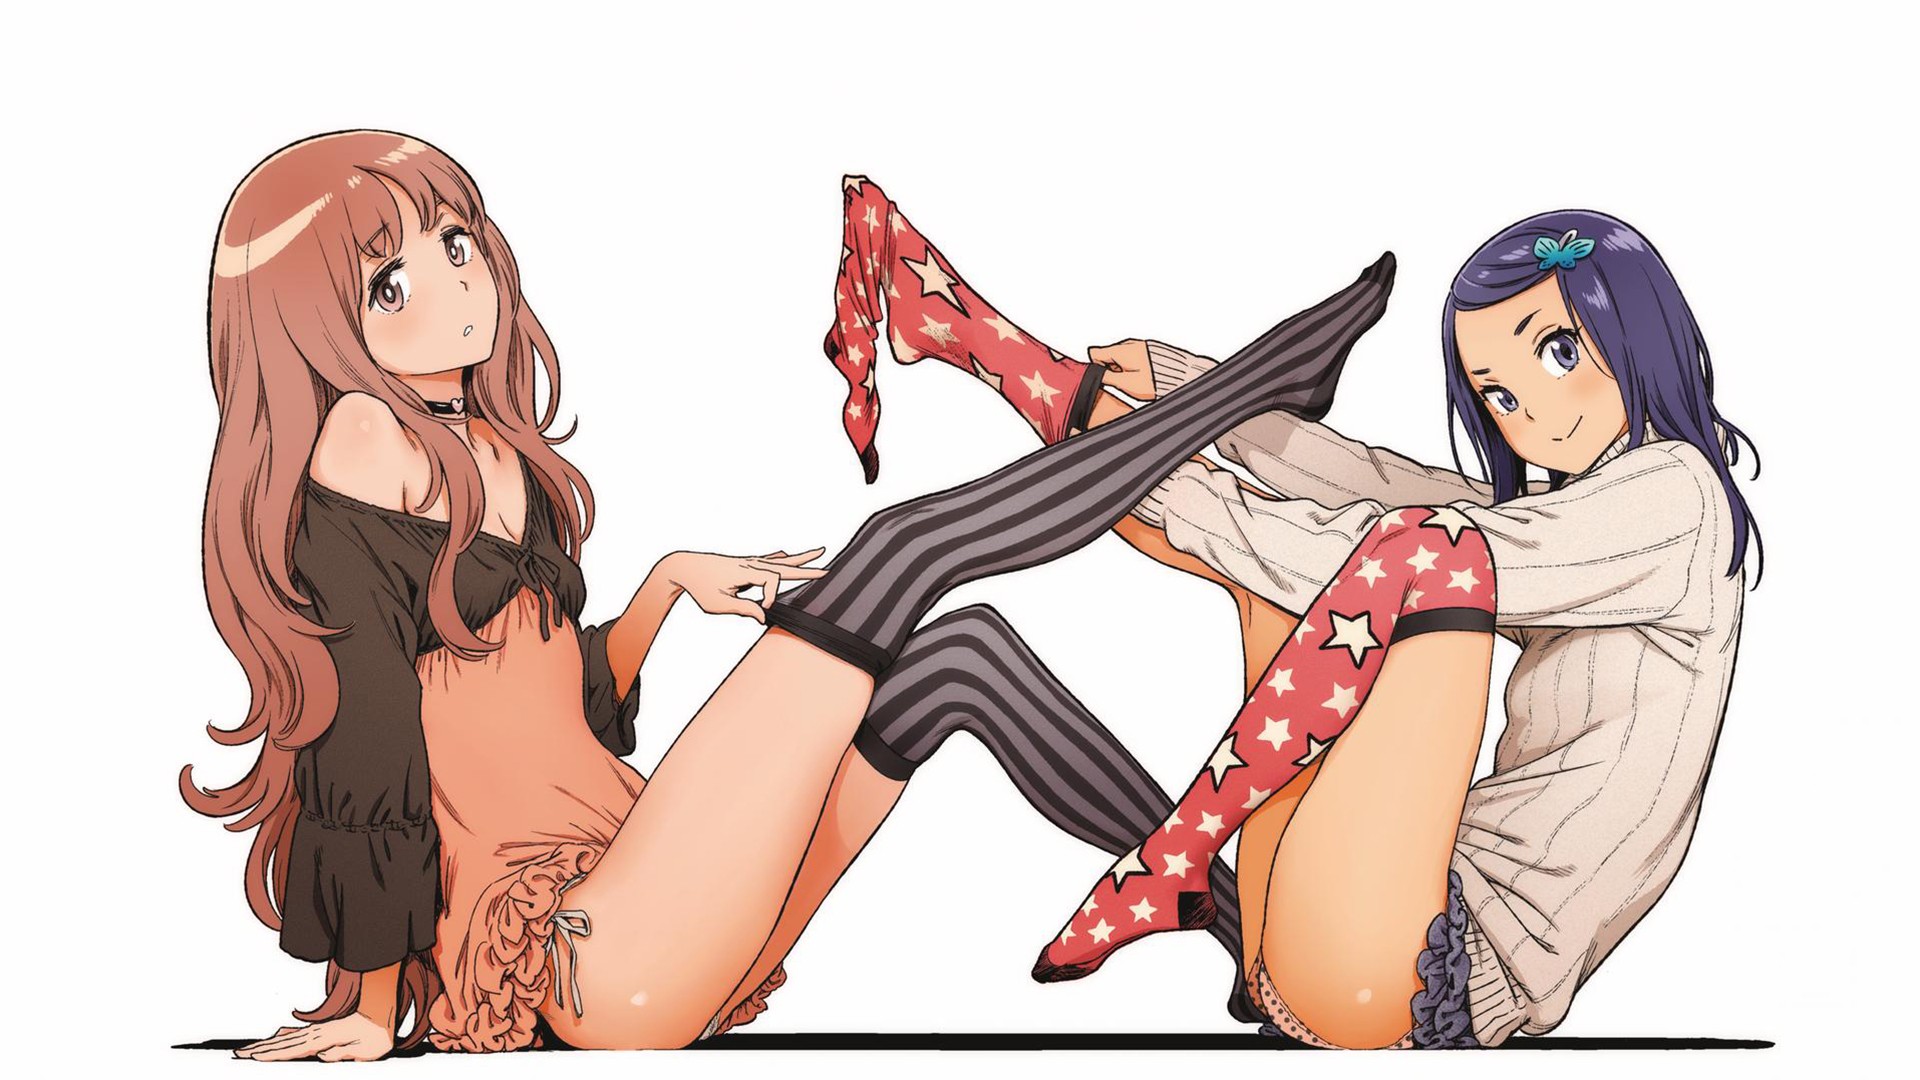 Anime 1920x1080 anime girls legs sitting white background anime stockings socks pulling socks striped stockings bent legs pointed toes OTK socks red socks two women legs up sweater looking at viewer